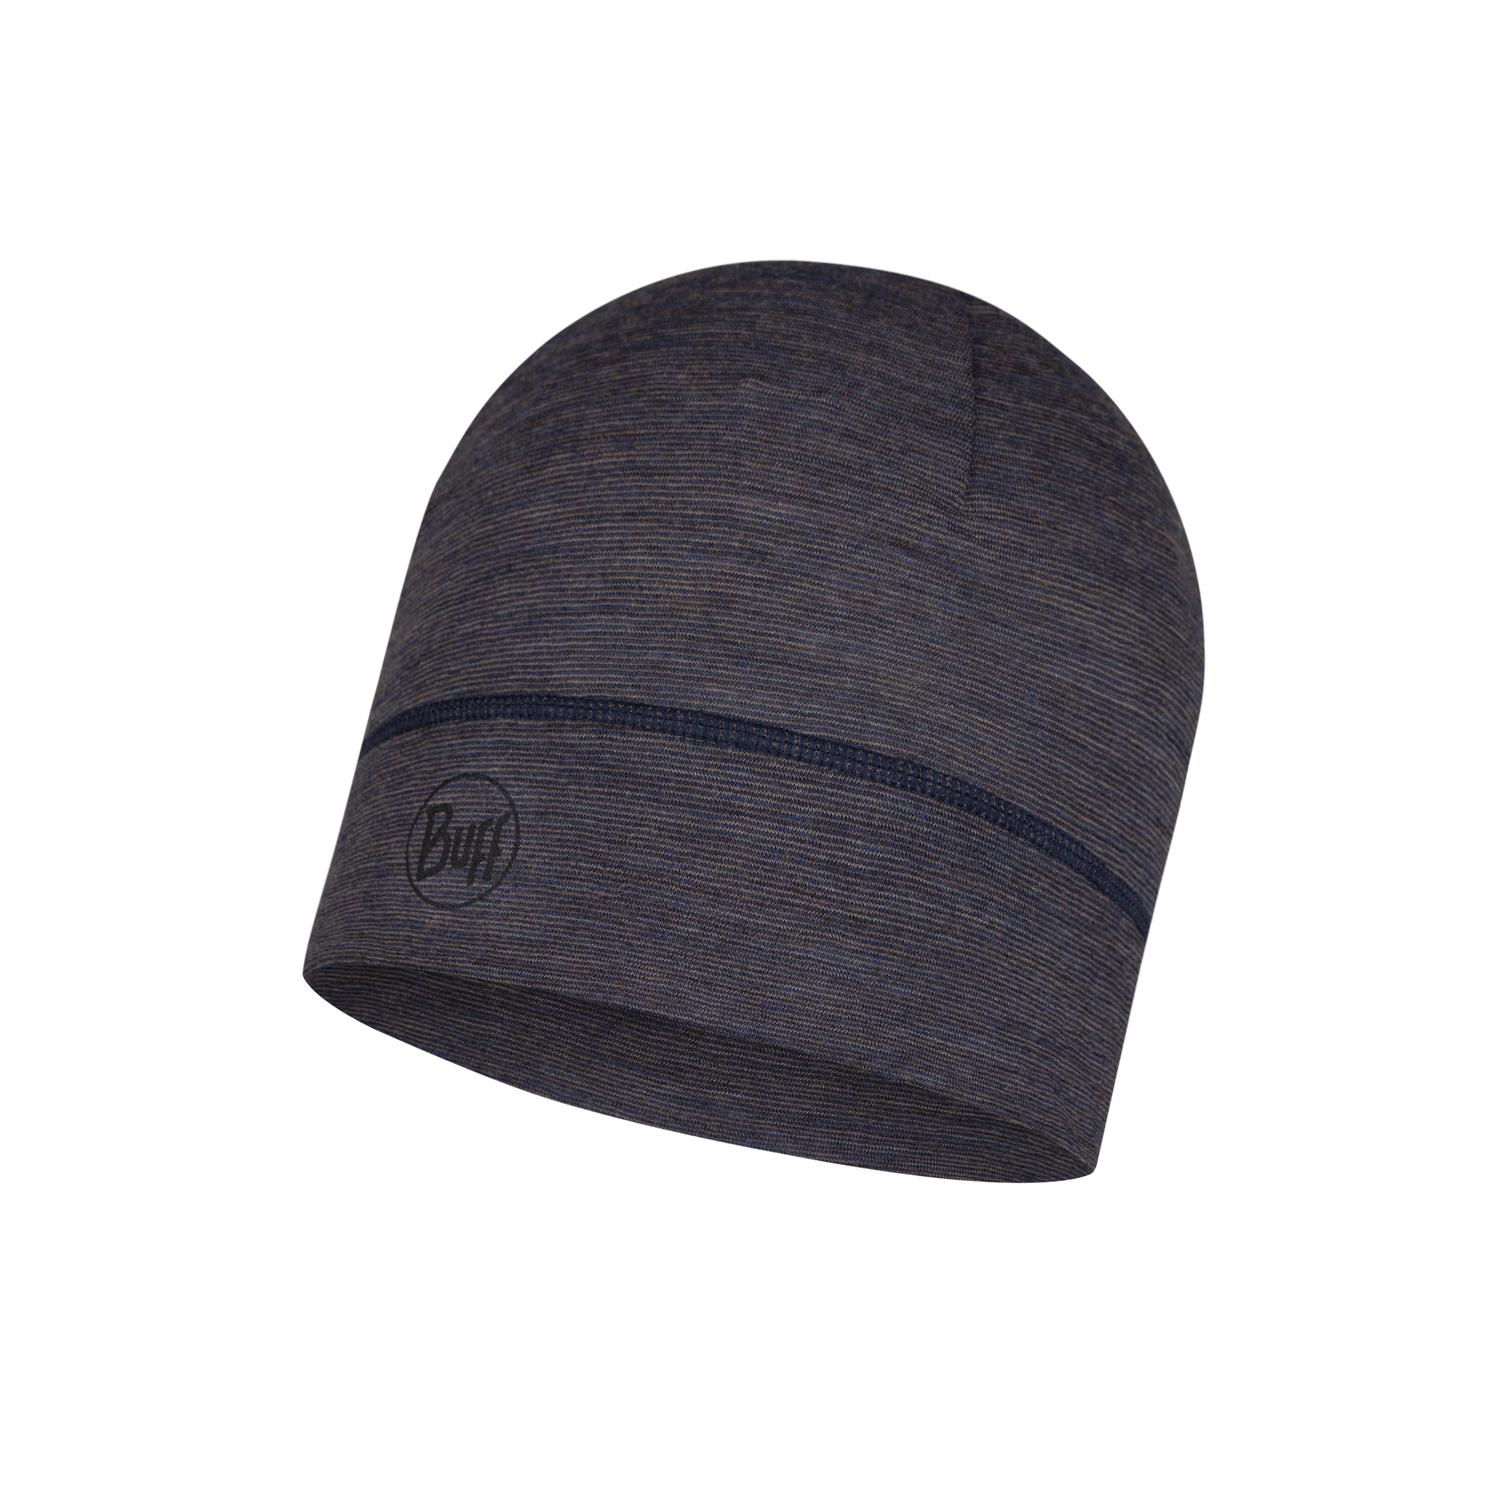 Шапка Buff Lightweight Merino Wool Hat Charcoal Grey Multi Stripes